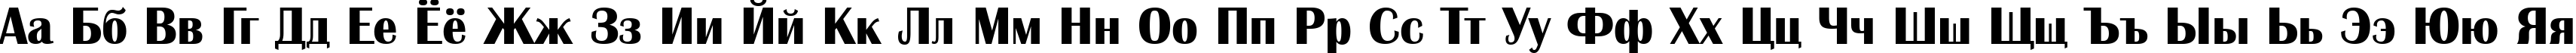 Пример написания русского алфавита шрифтом a_Albionic Bold